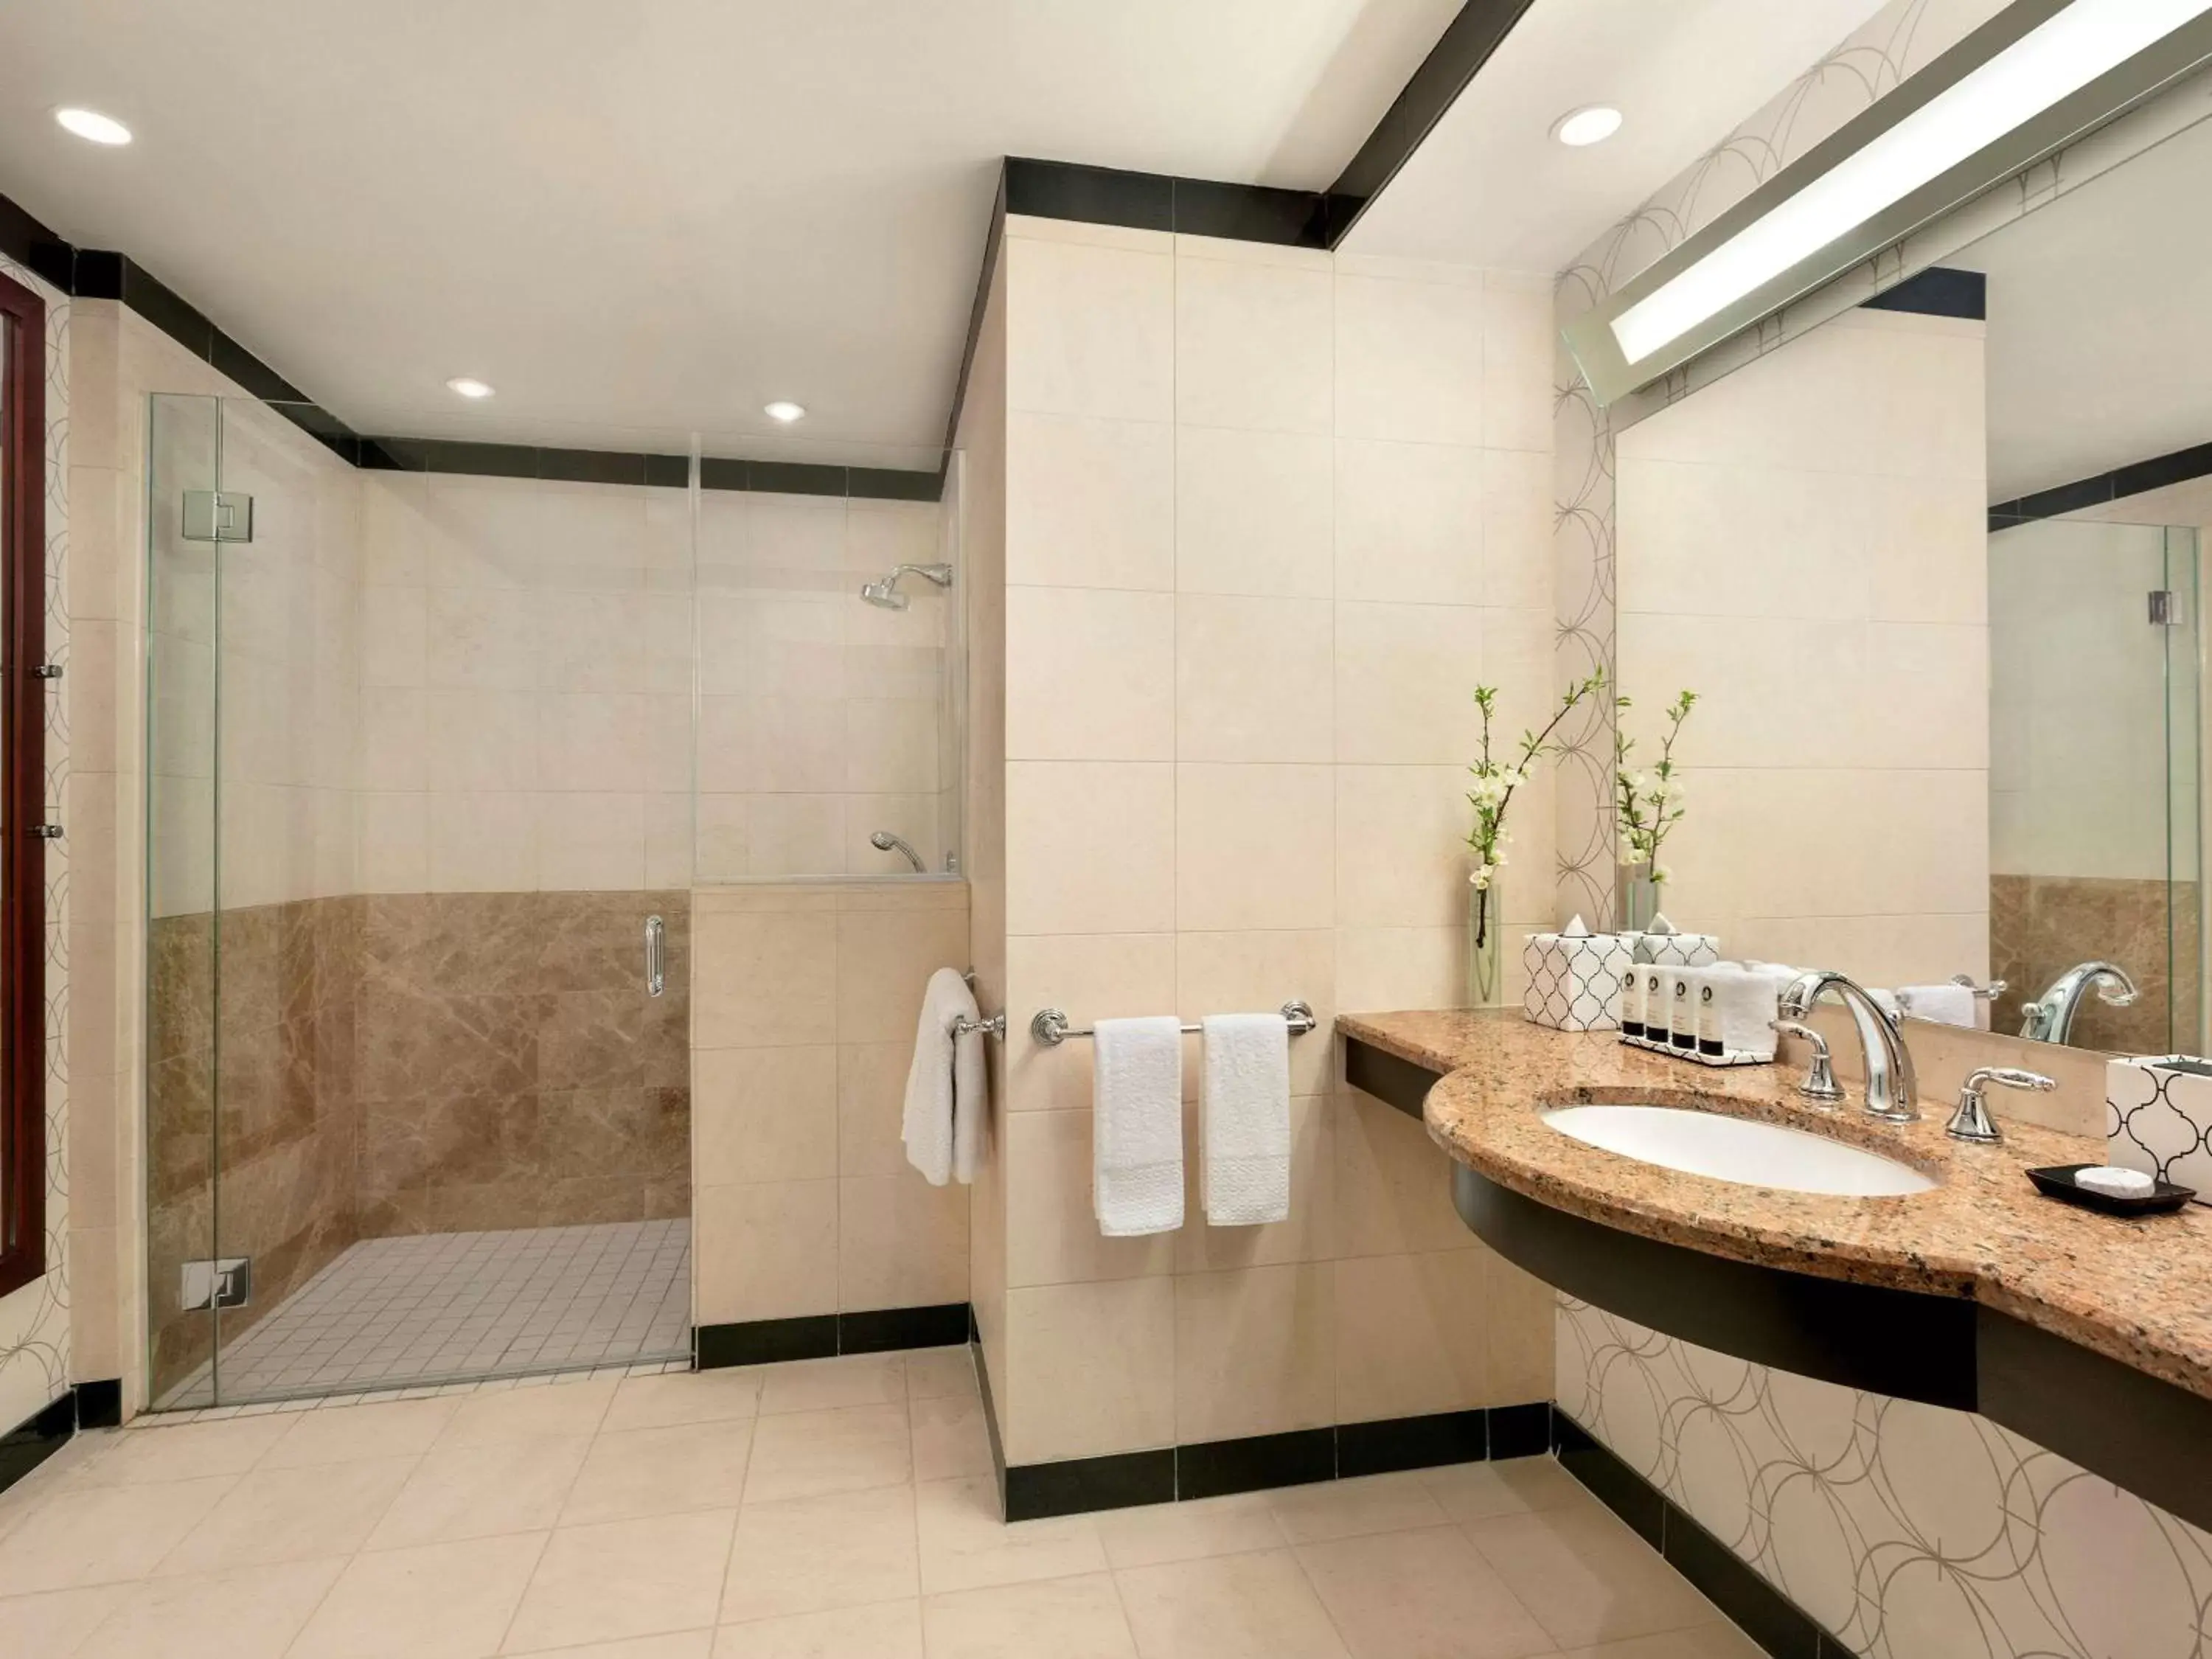 Photo of the whole room, Bathroom in Sofitel Philadelphia at Rittenhouse Square